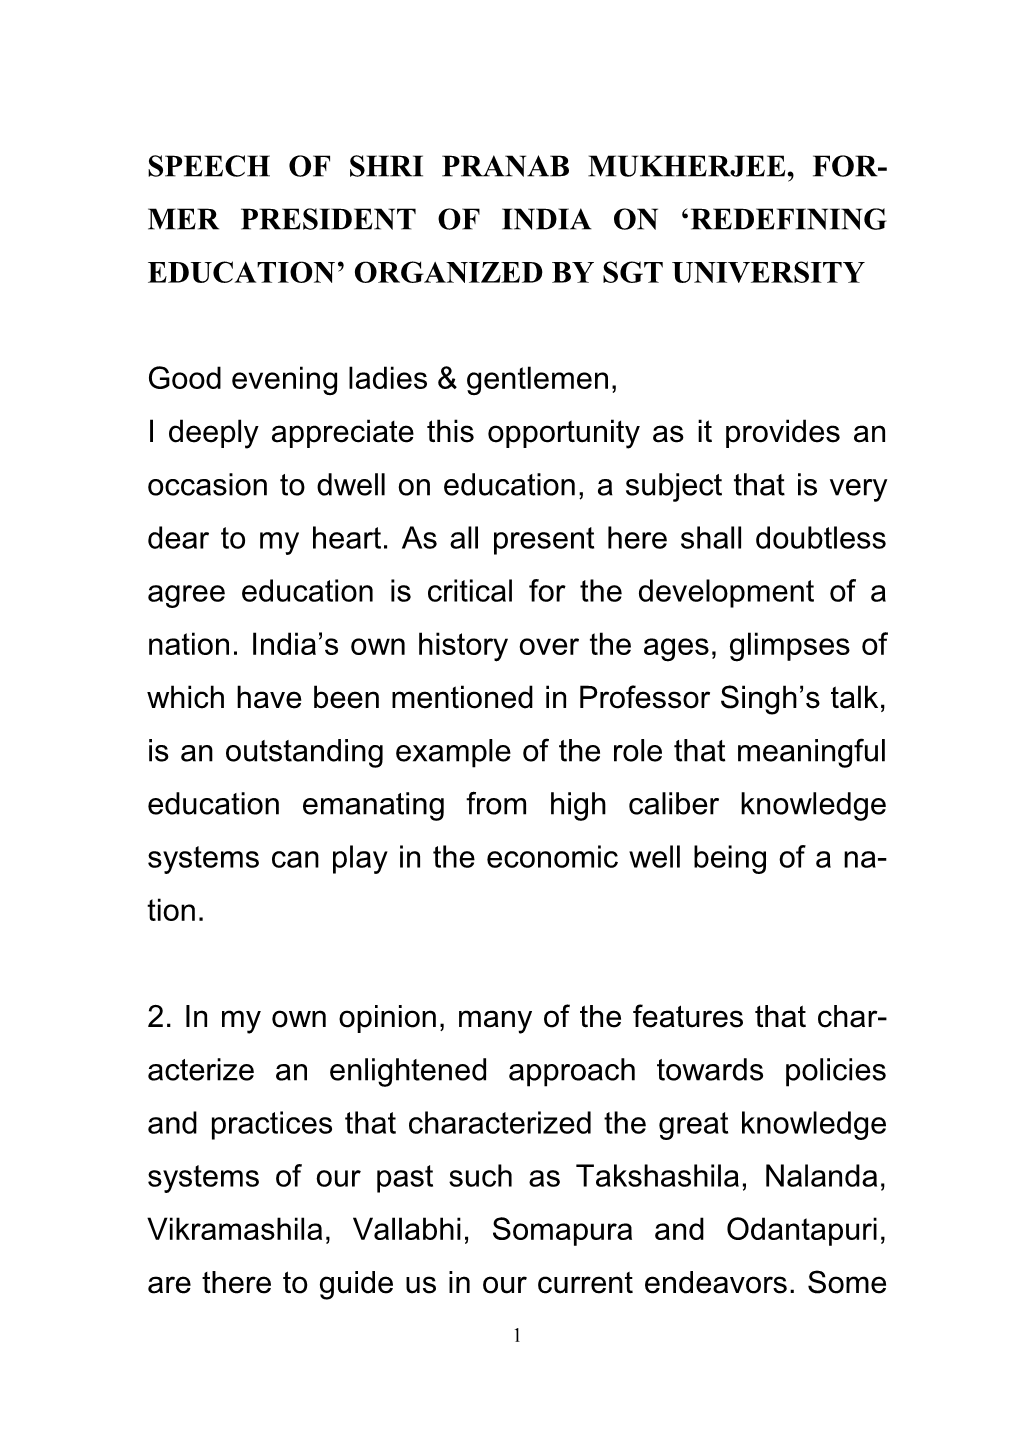 Speech of Shri Pranab Mukherjee, For- Mer President of India on ‘Redefining Education’ Organized by Sgt University